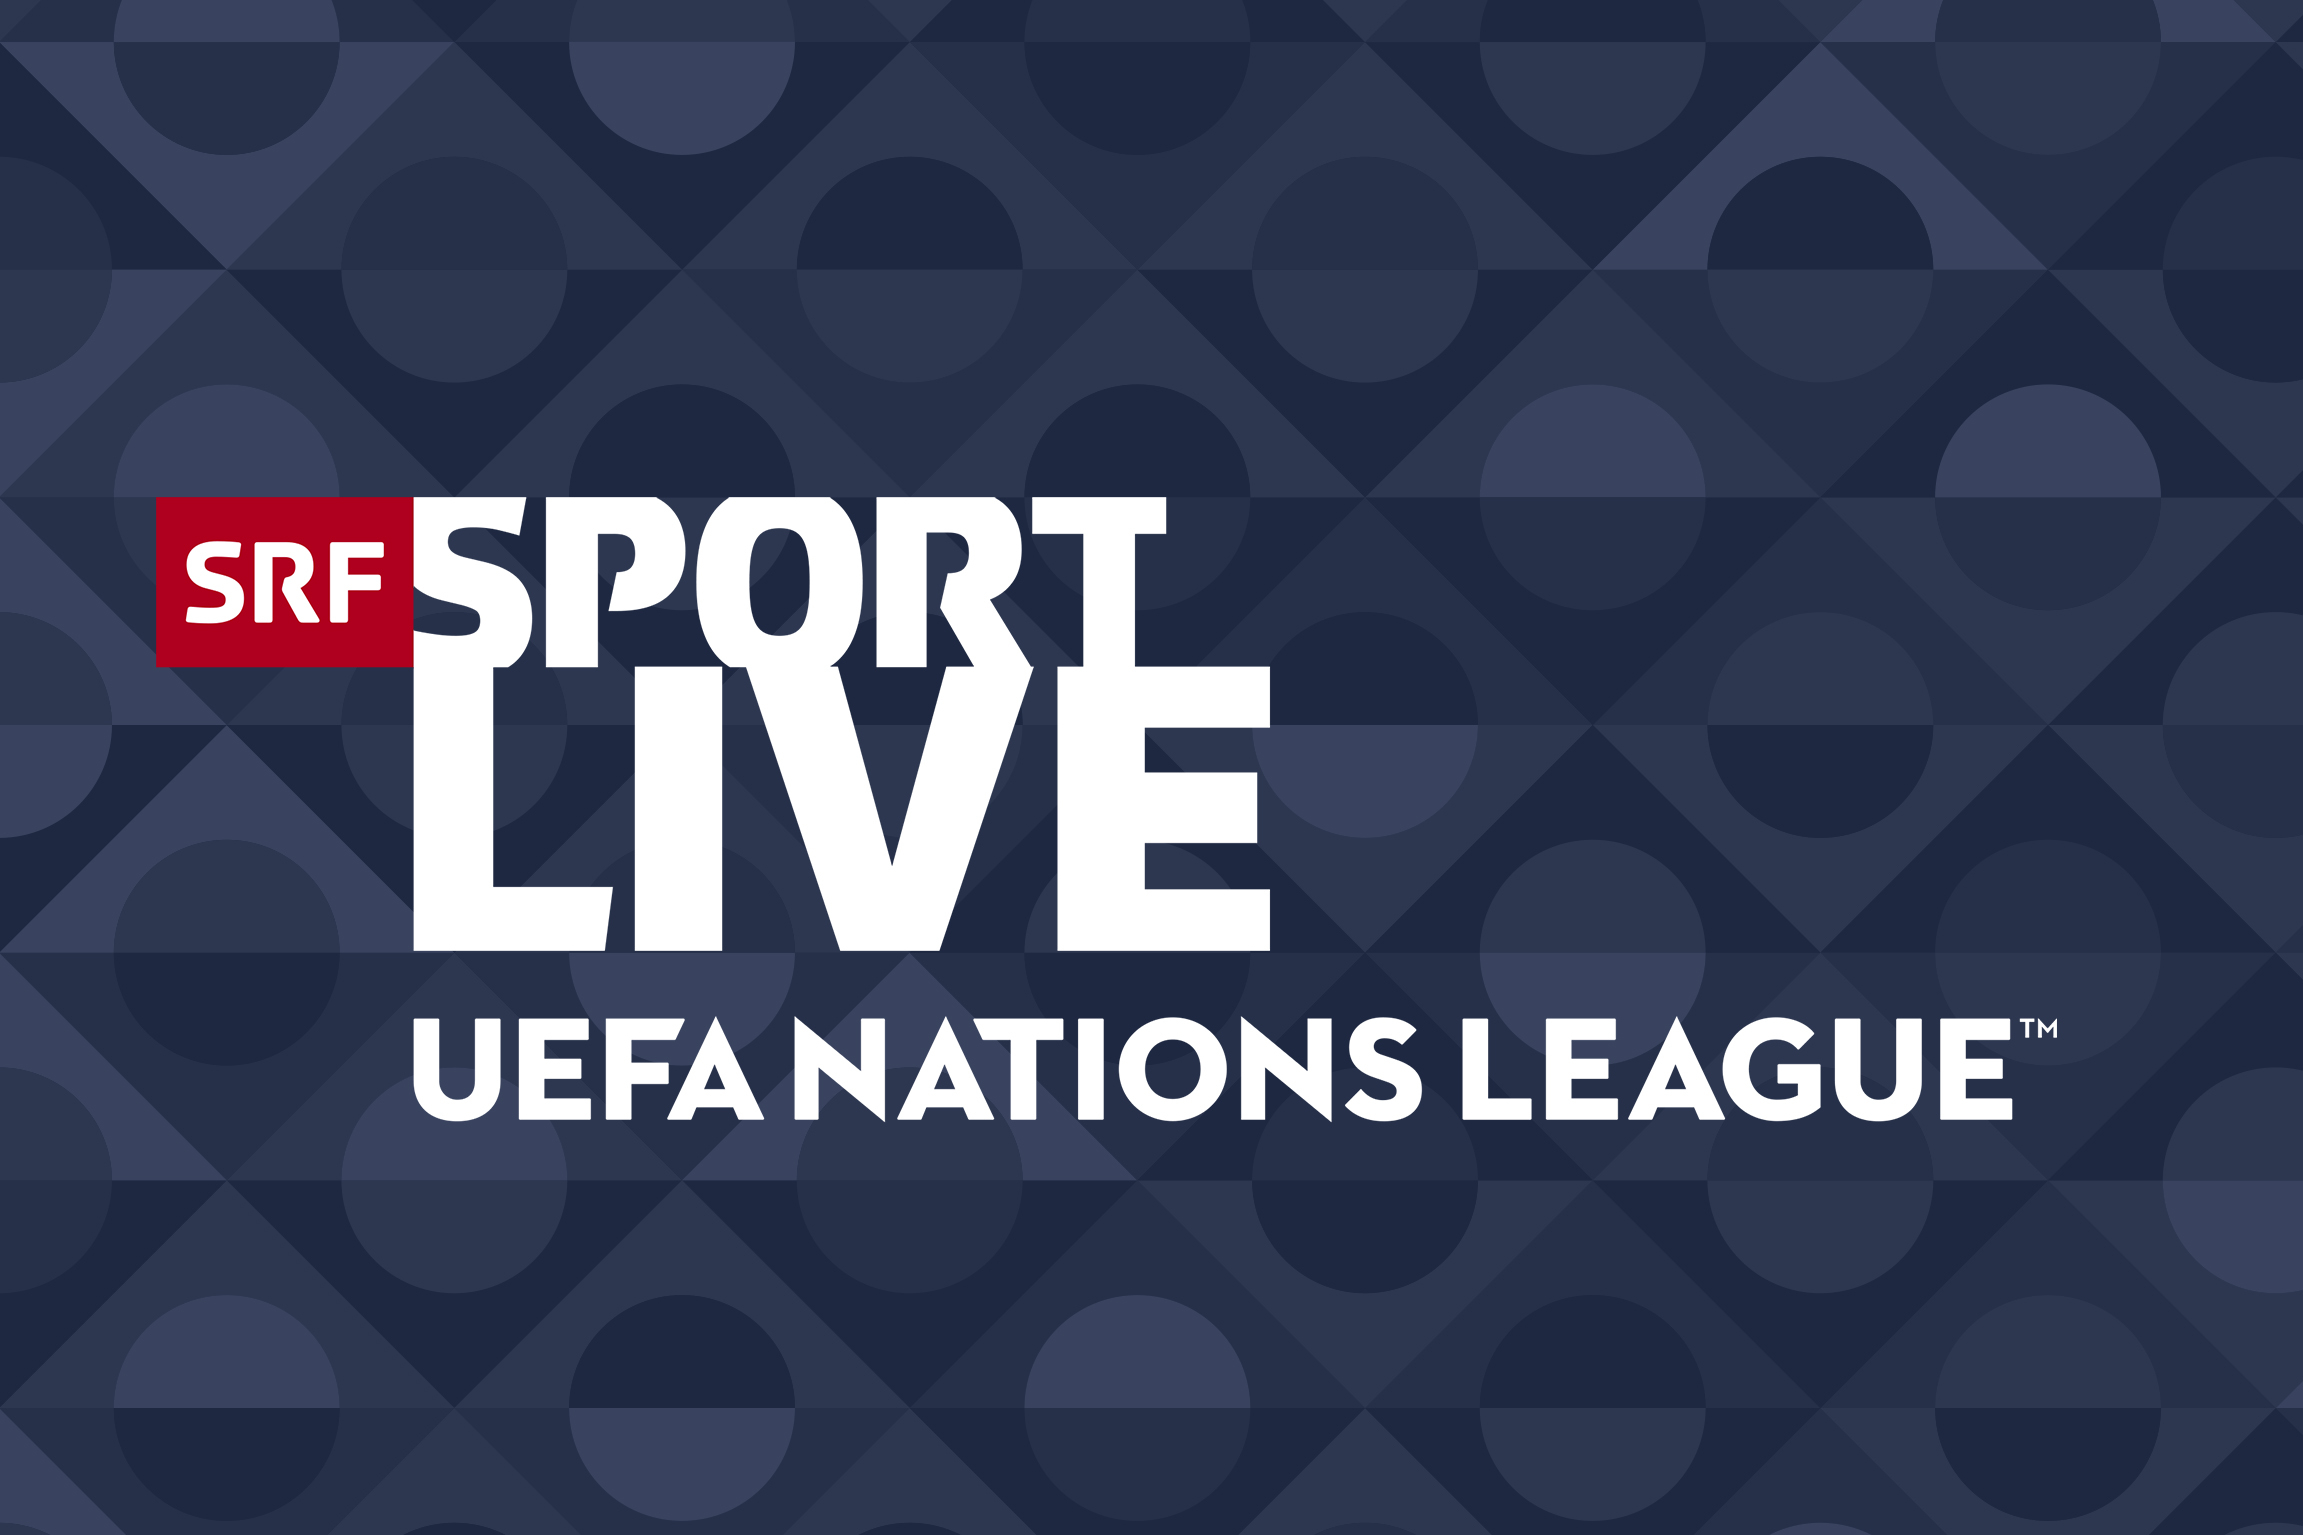 UEFA Nations League SRF zeigt neu Livespiele der Top-Nationen - Medienportal